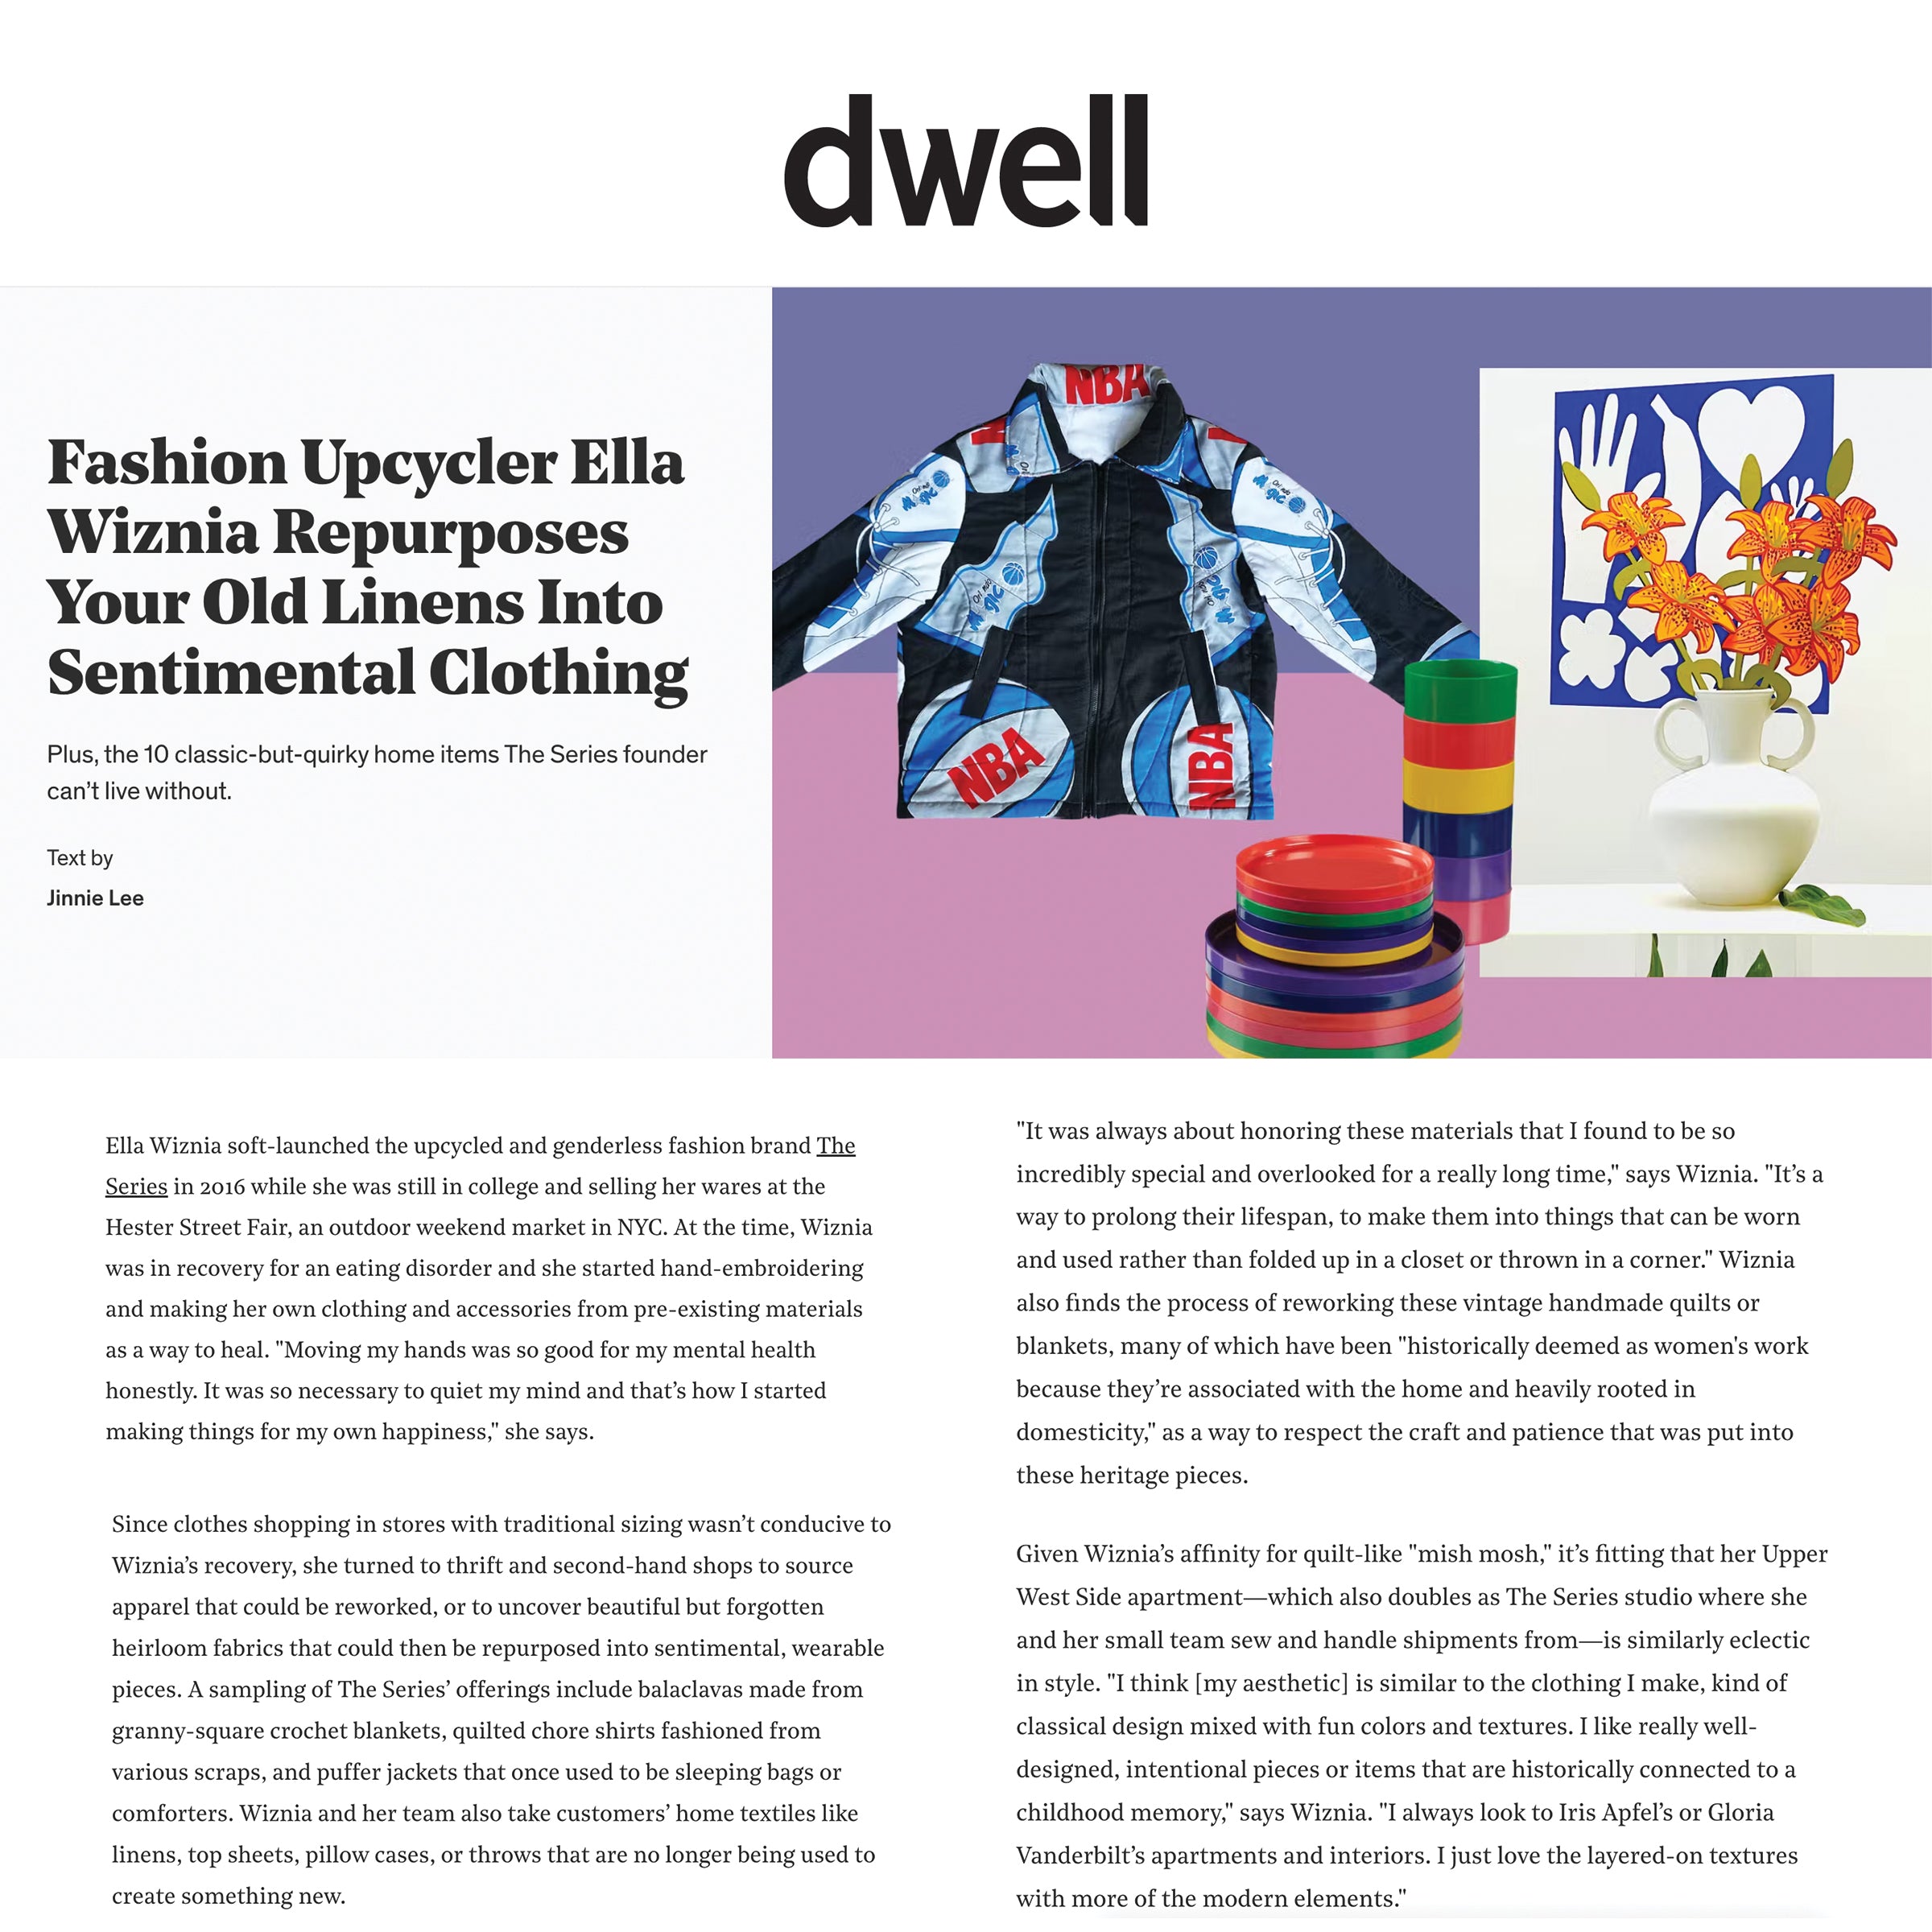 dwell | Fashion Upcycler Ella Wiznia Repurposes Linens Into Sentimental Clothing